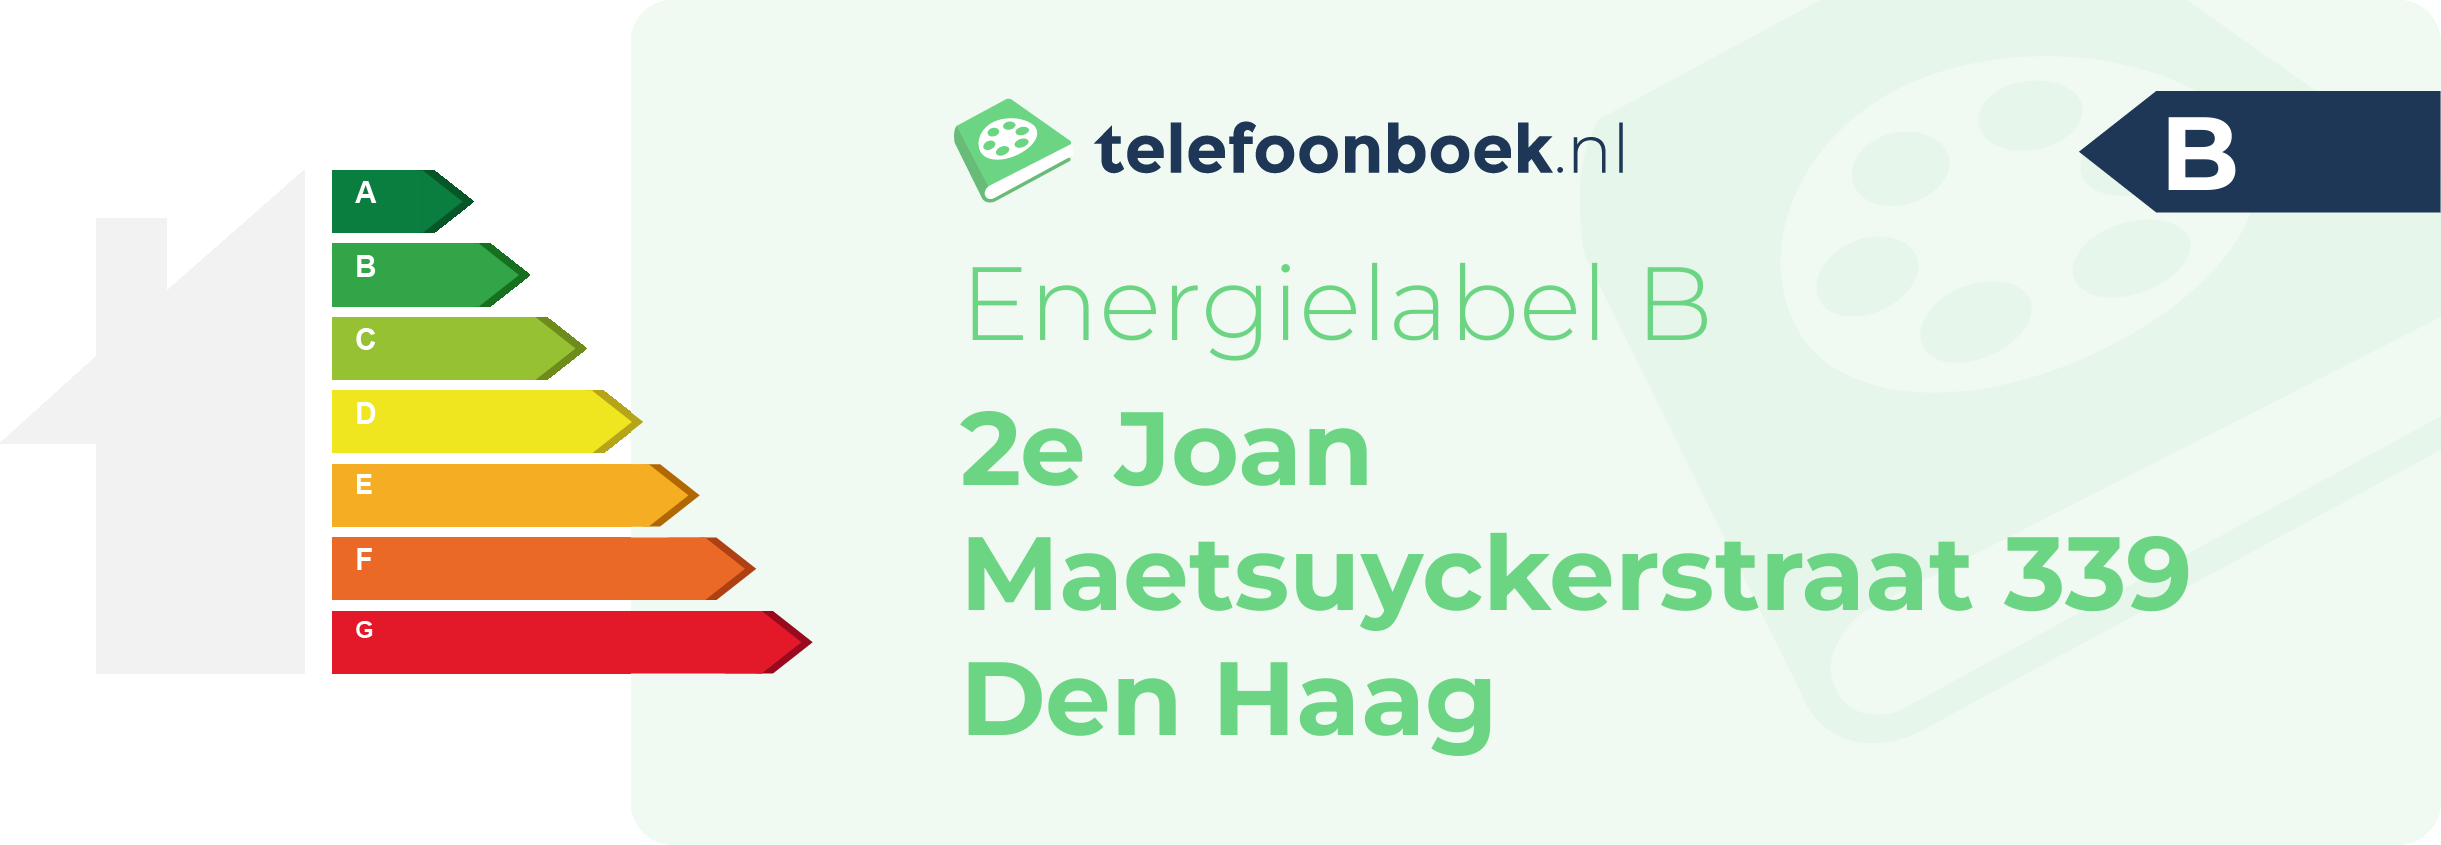 Energielabel 2e Joan Maetsuyckerstraat 339 Den Haag